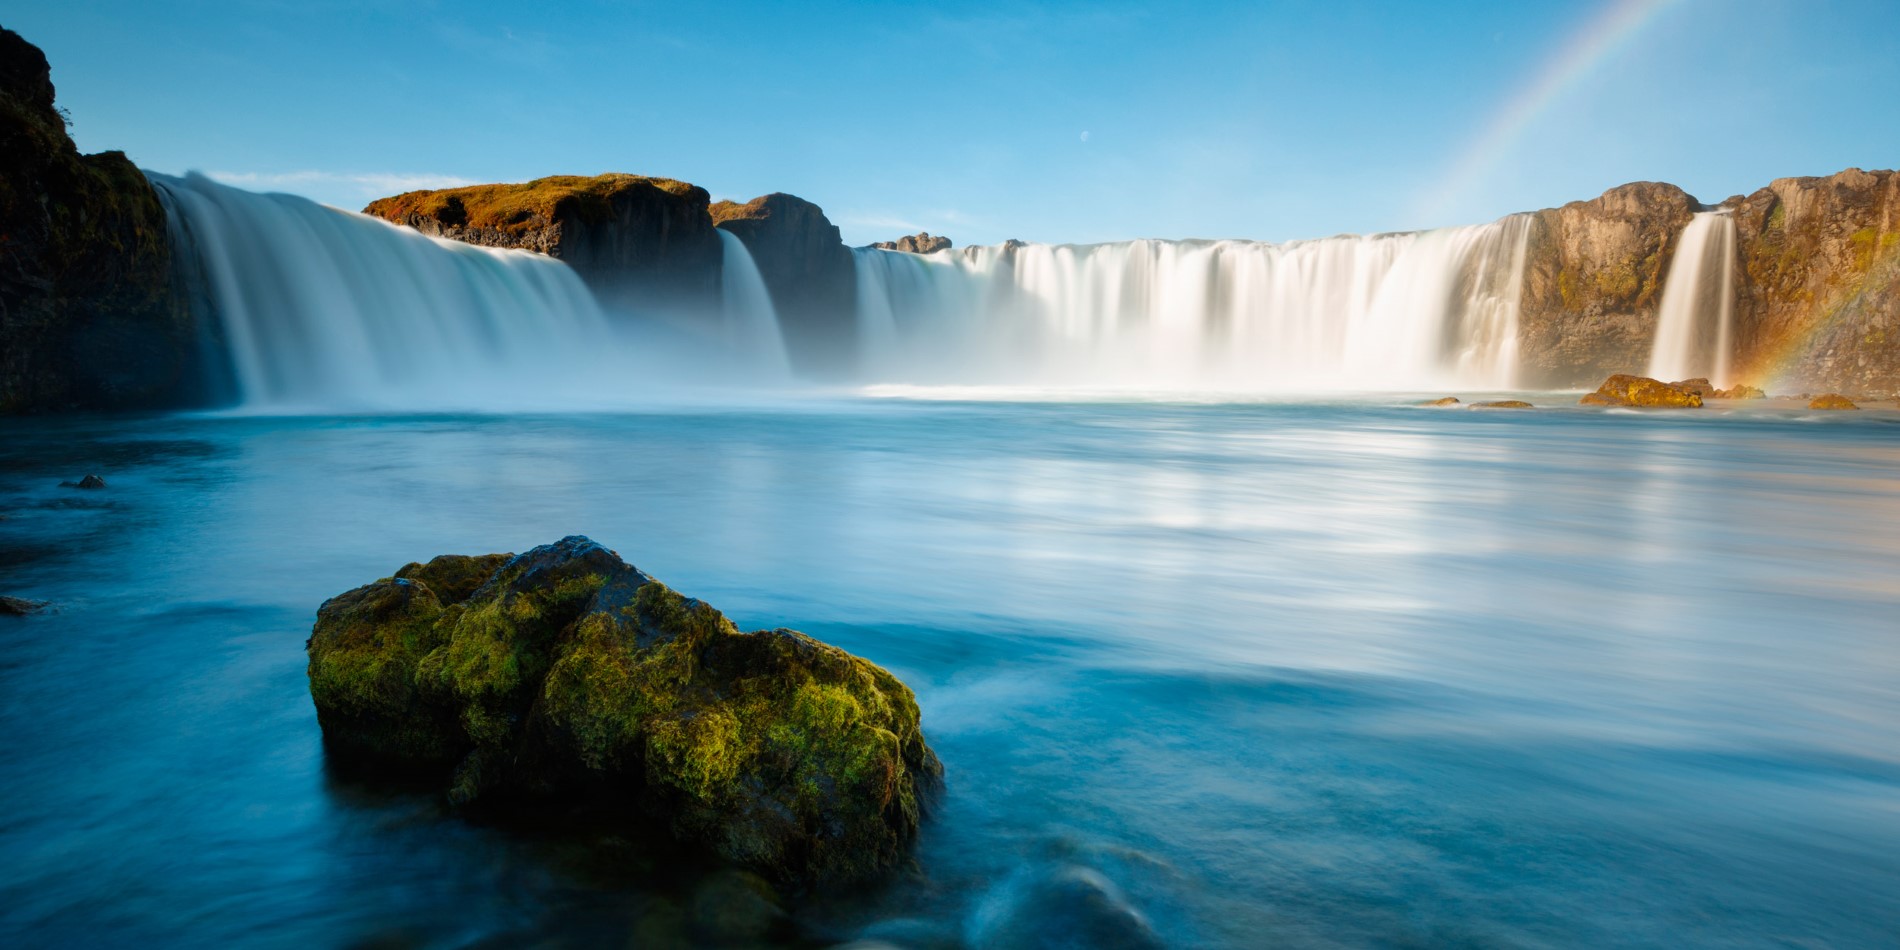 Goðafoss – Waterfall of the Gods